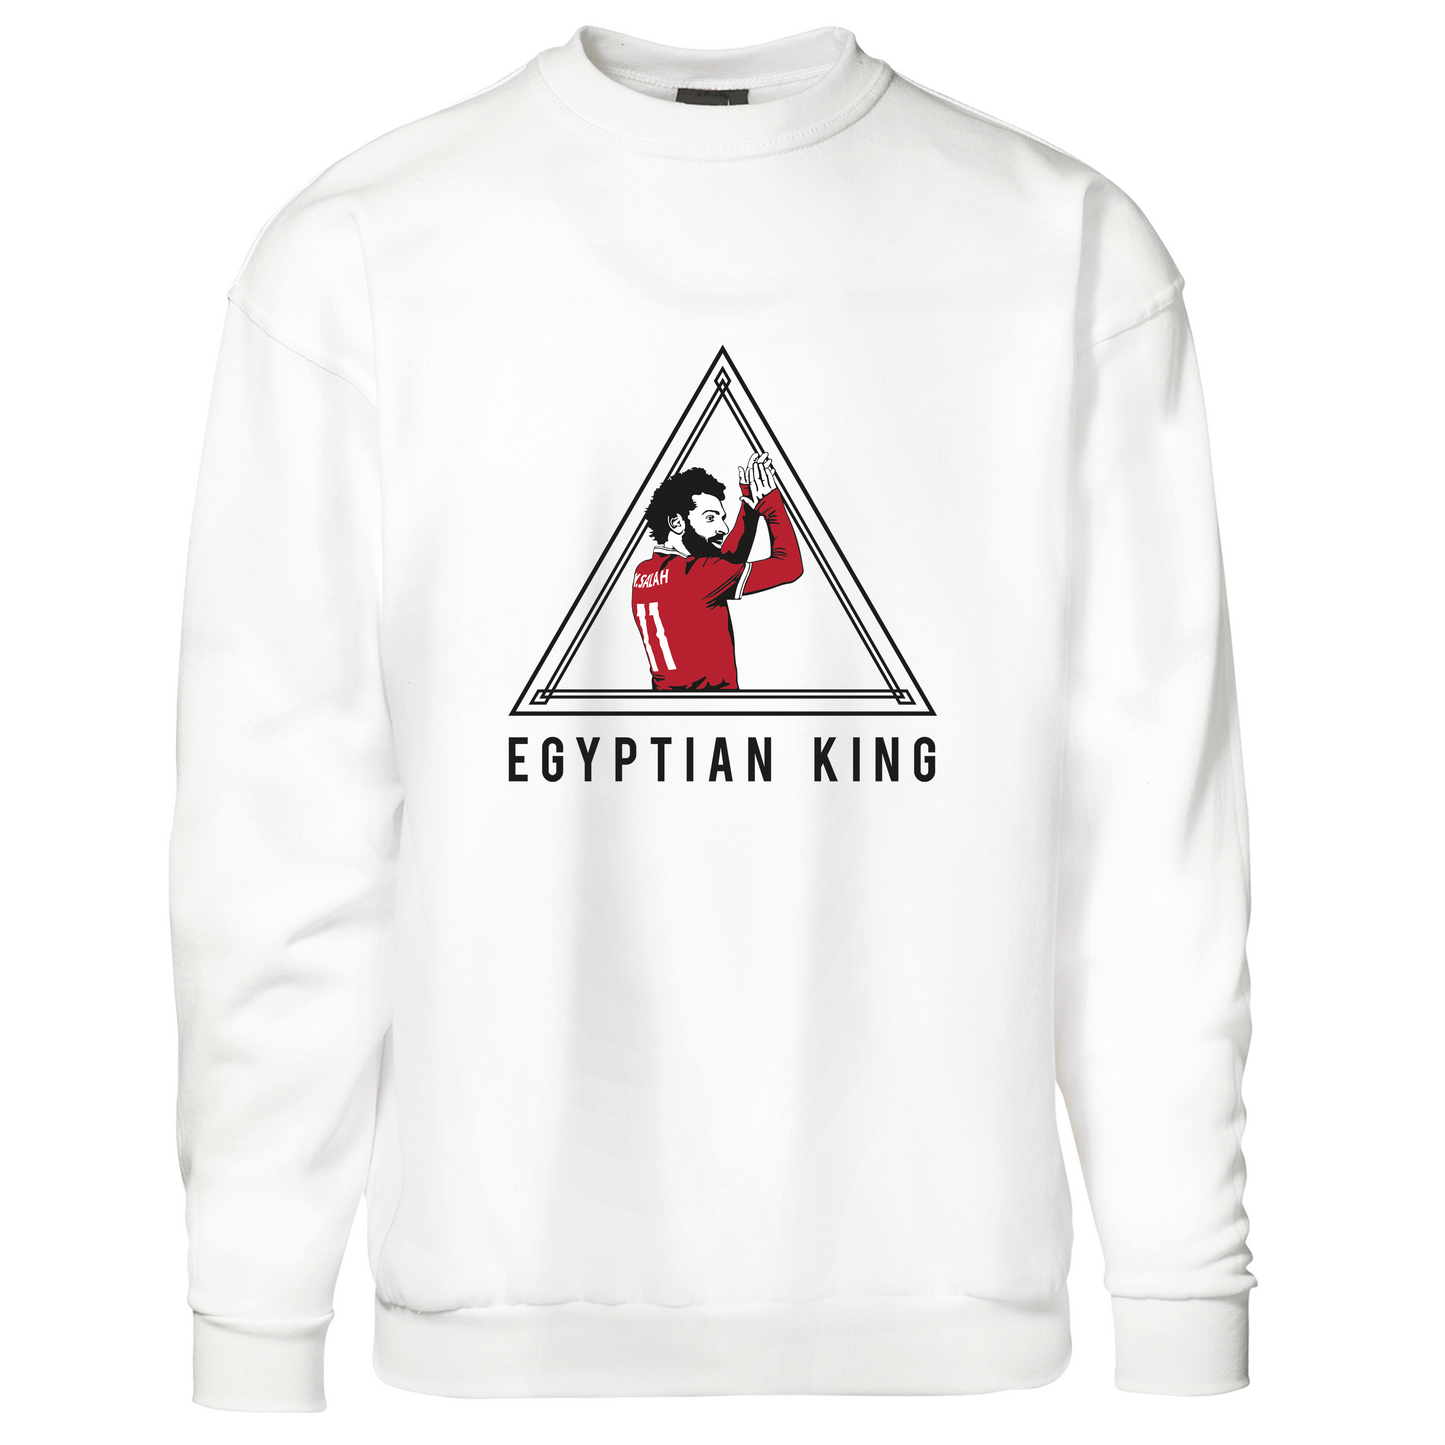 Egyptian King - Sweatshirt - Børn